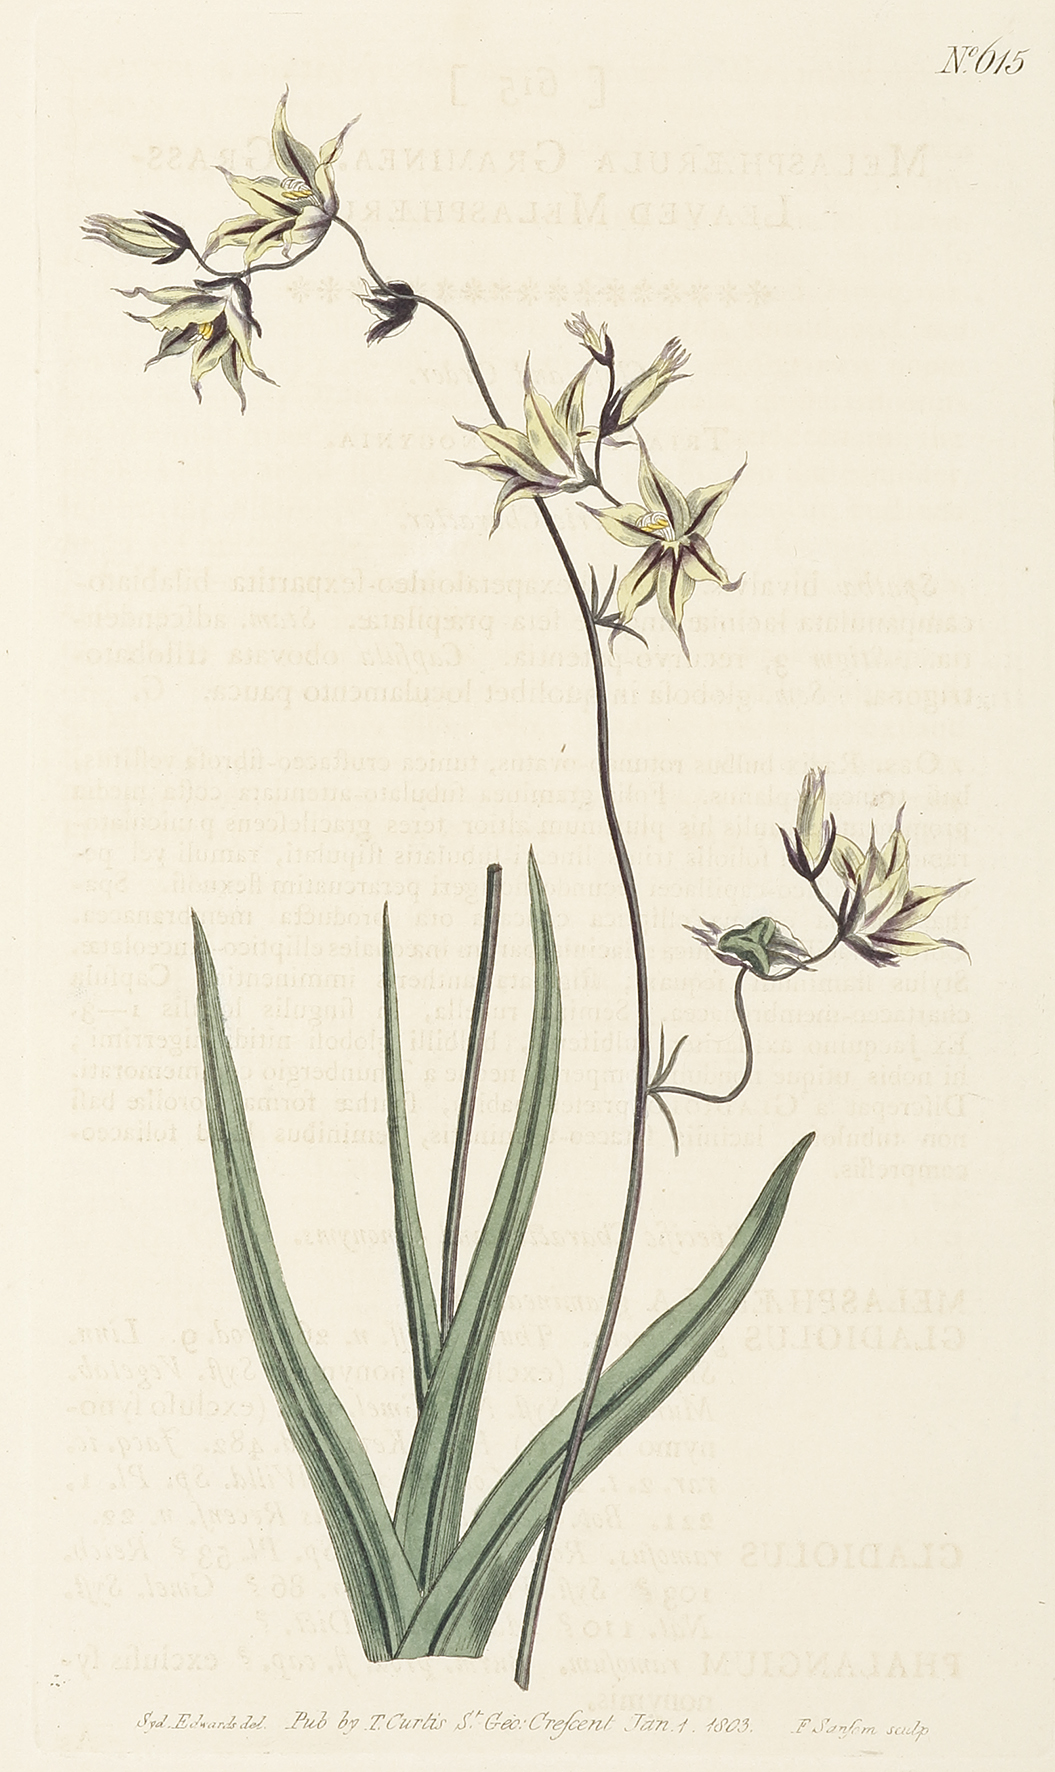 Melaspaerula Graminea. Grass-Leaved Melasphaerula. - Antique Print from 1803